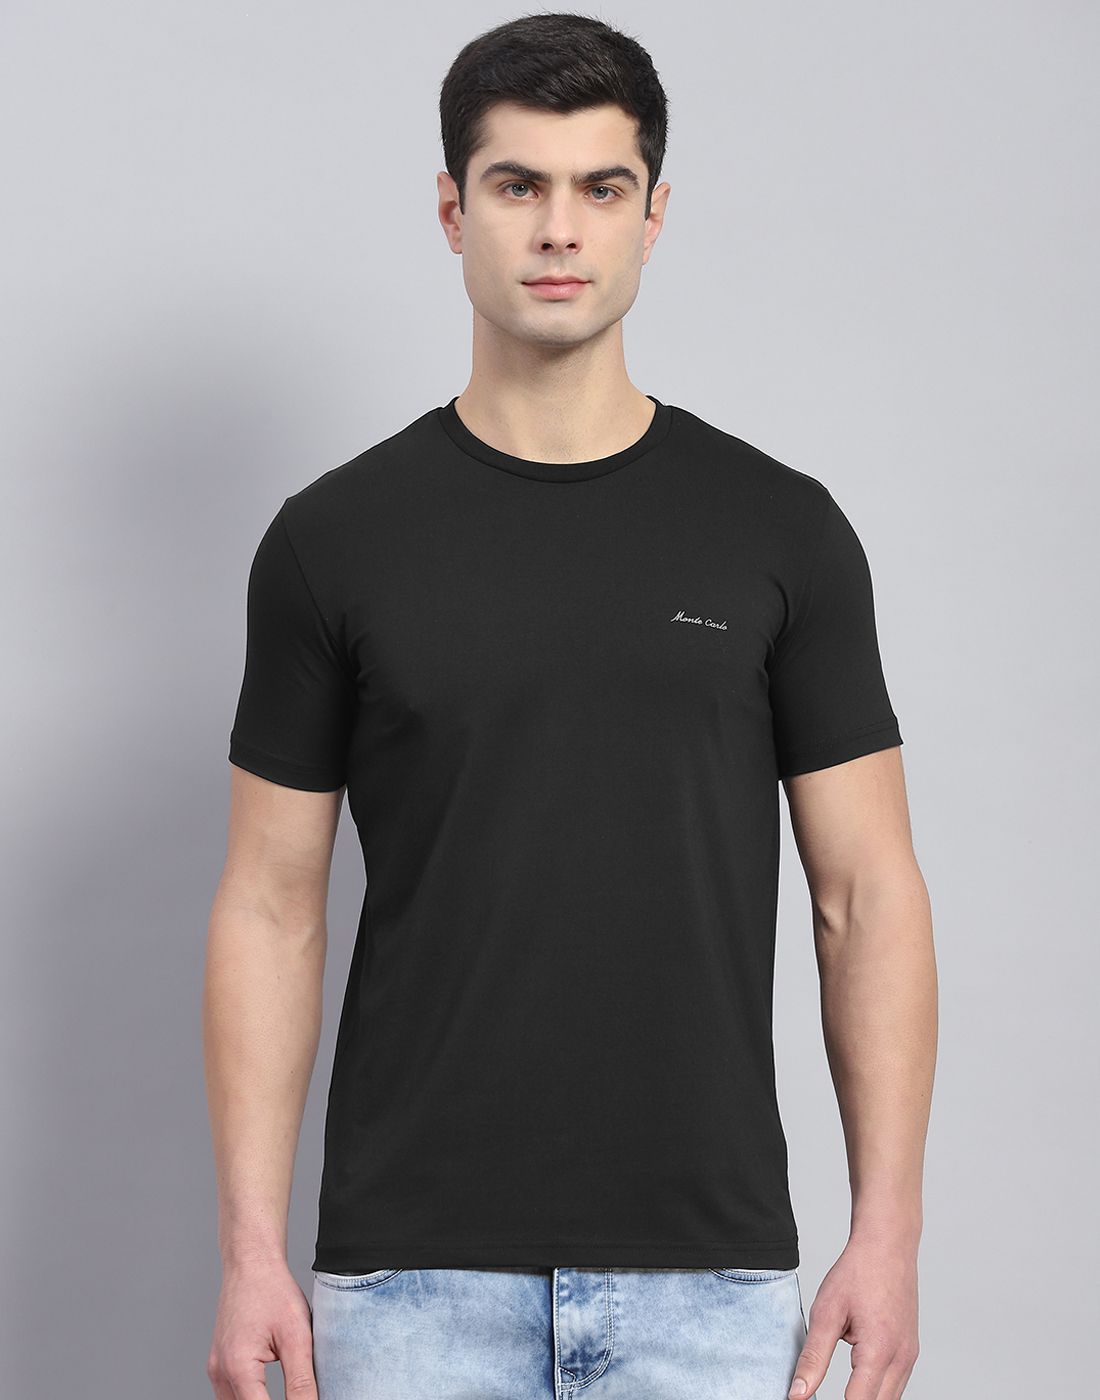     			Monte Carlo Cotton Blend Regular Fit Solid Half Sleeves Men's T-Shirt - Black ( Pack of 1 )